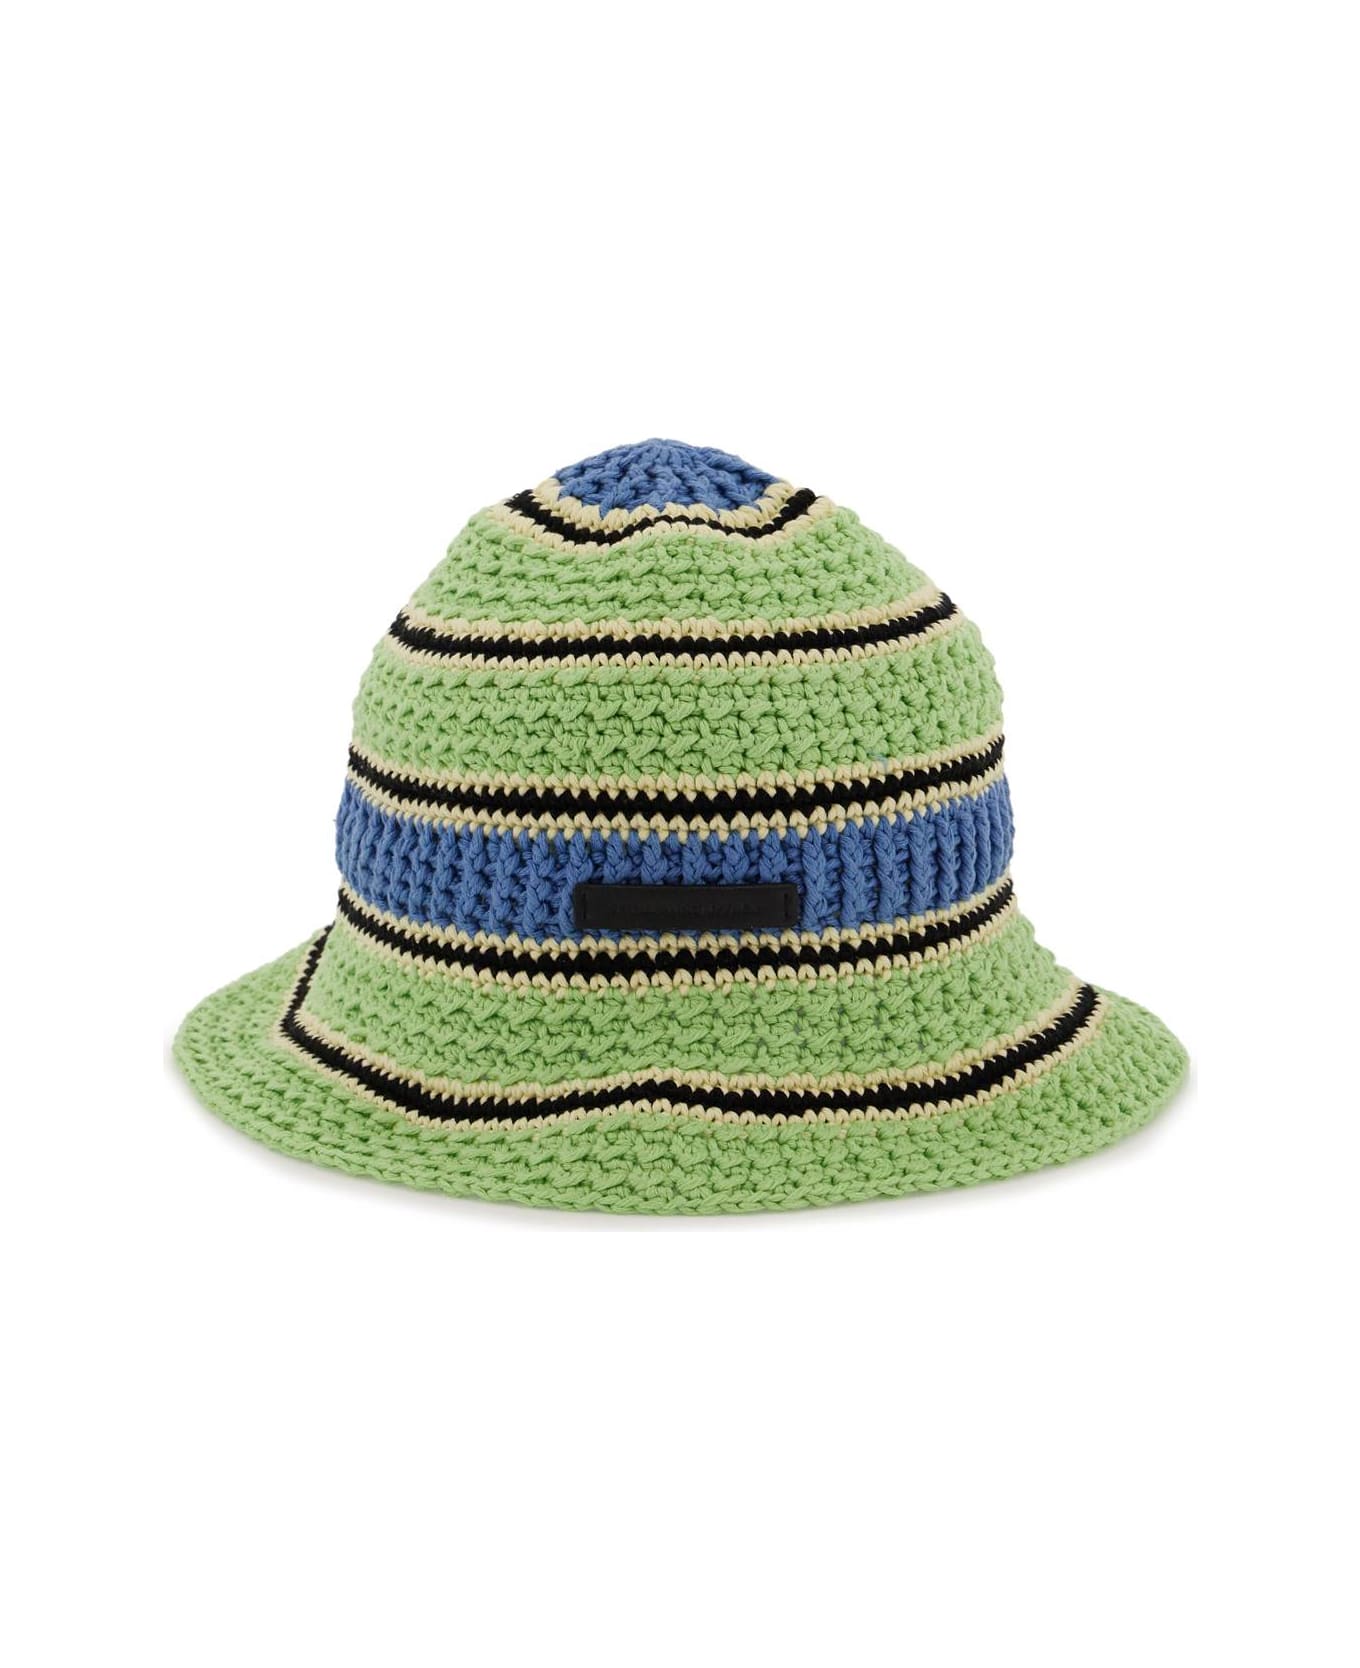 Stella McCartney Striped Crochet Hat - Multicolor